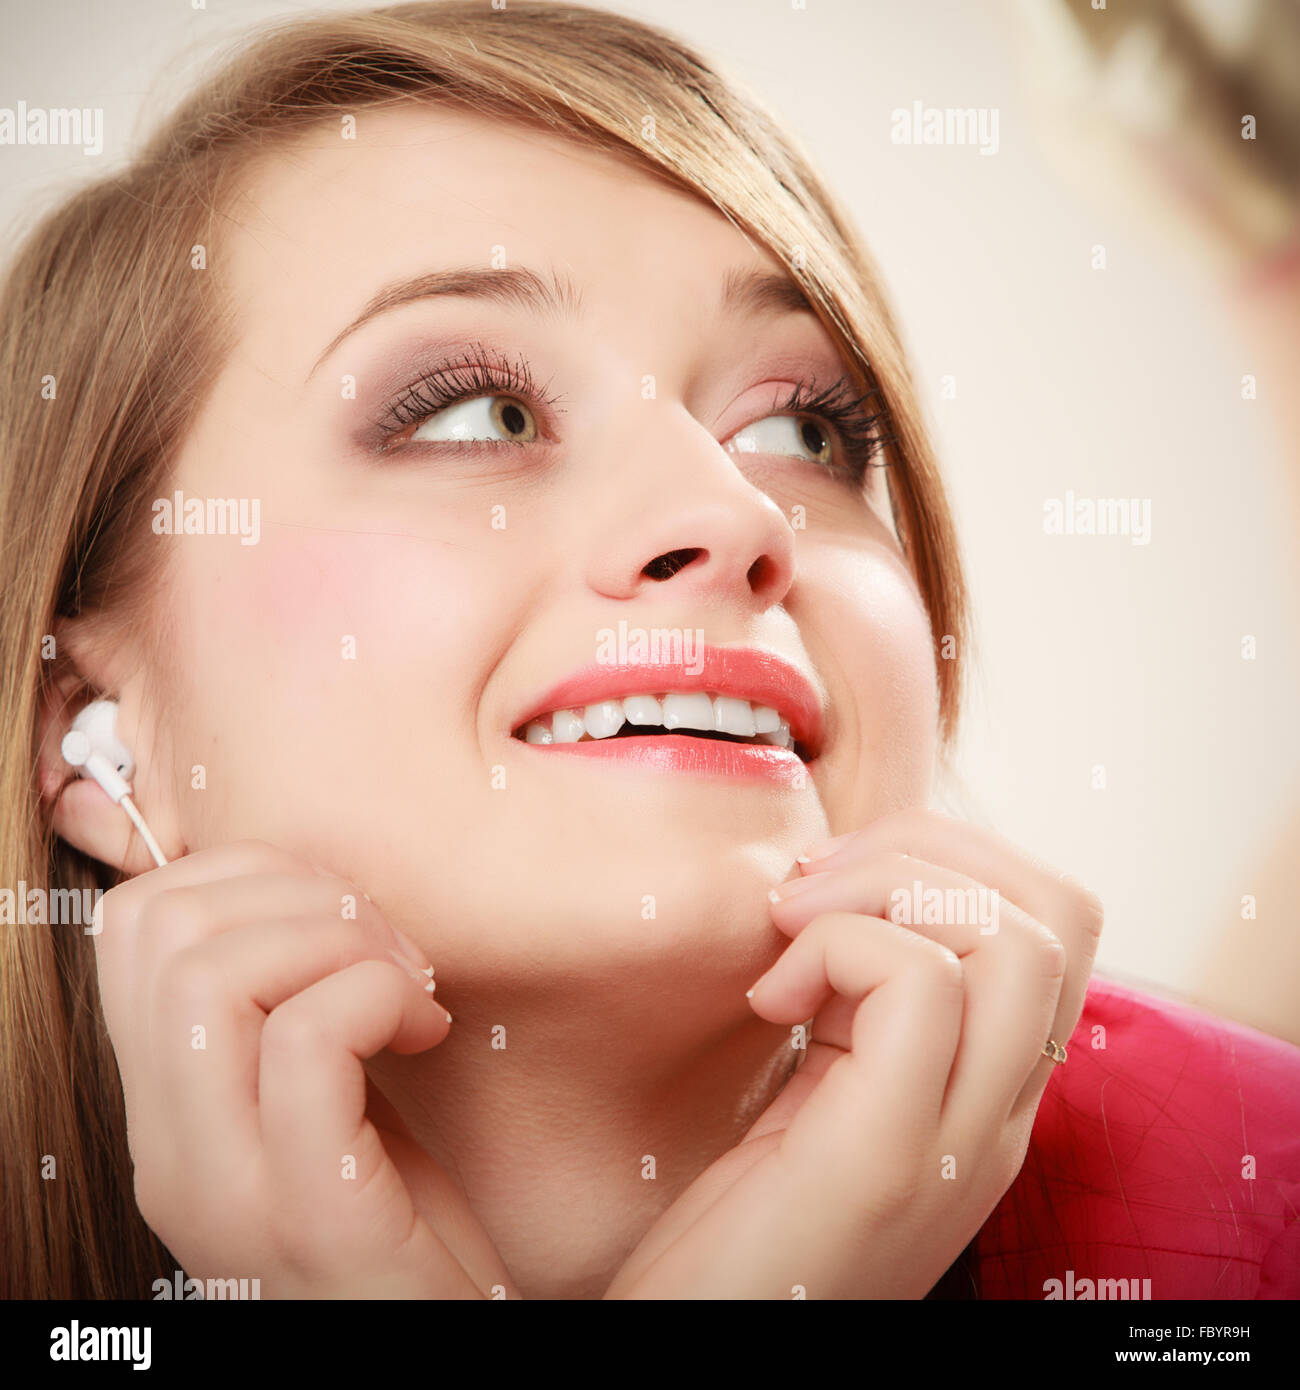 Girl With White Headphones Listening To Music Stock Photo Alamy